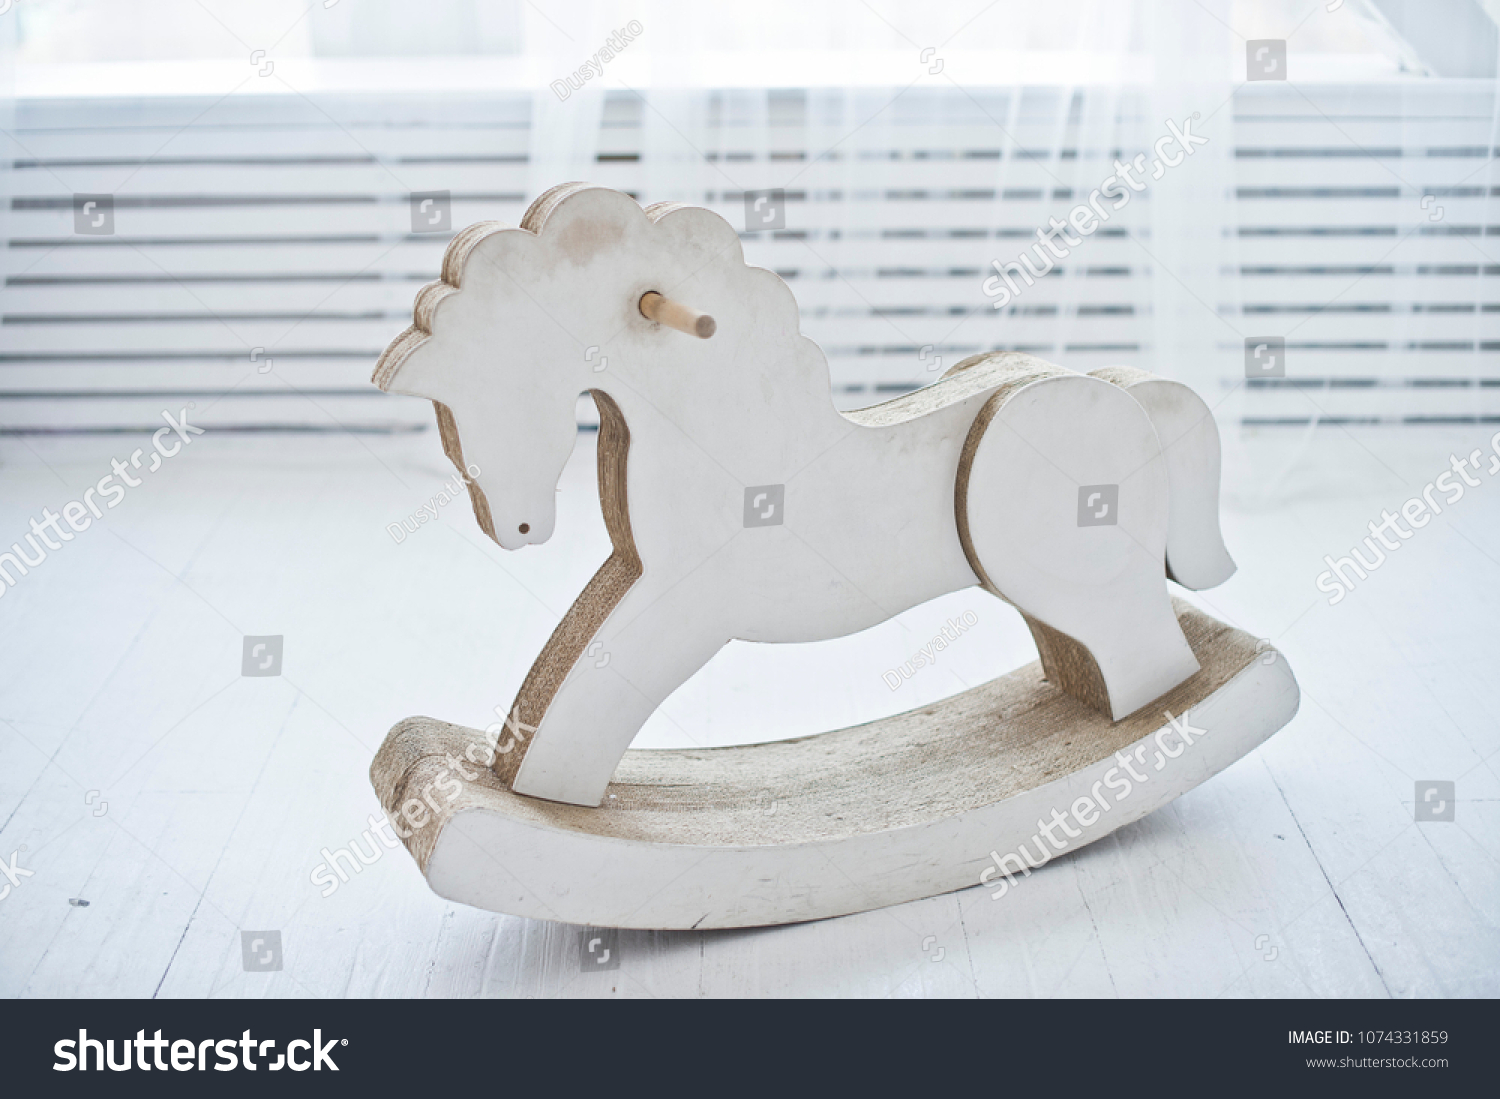 cardboard rocking horse